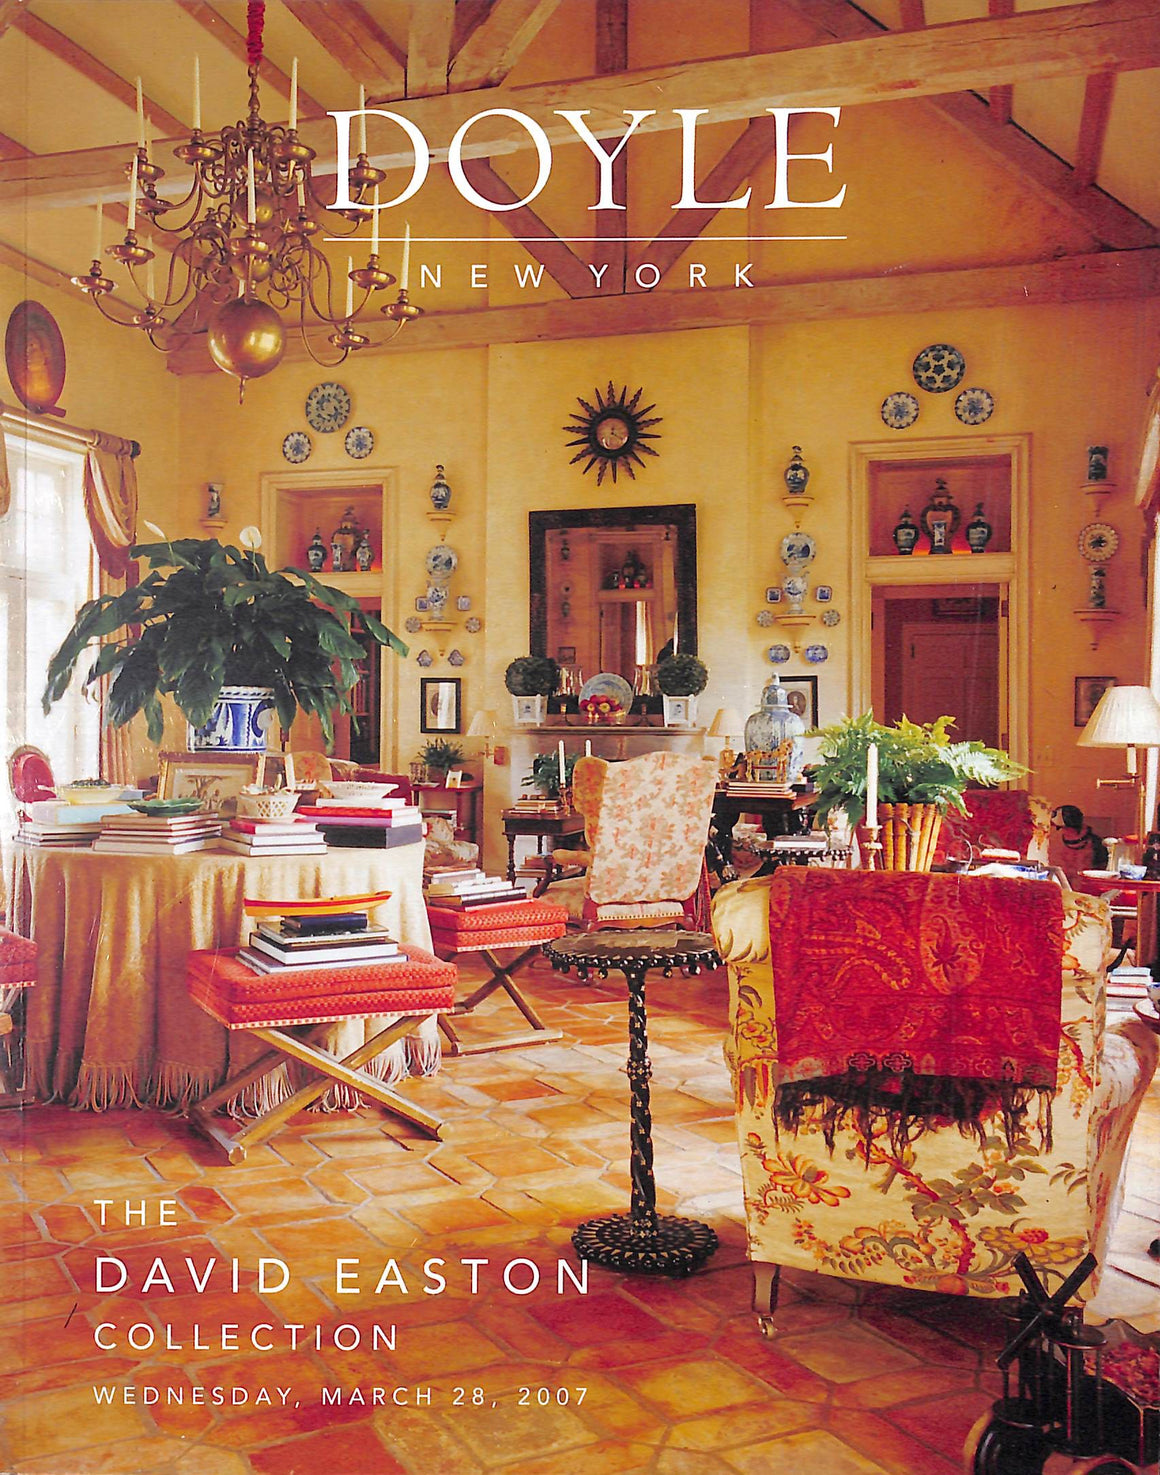 "The David Easton Collection" 2007 Doyle New York